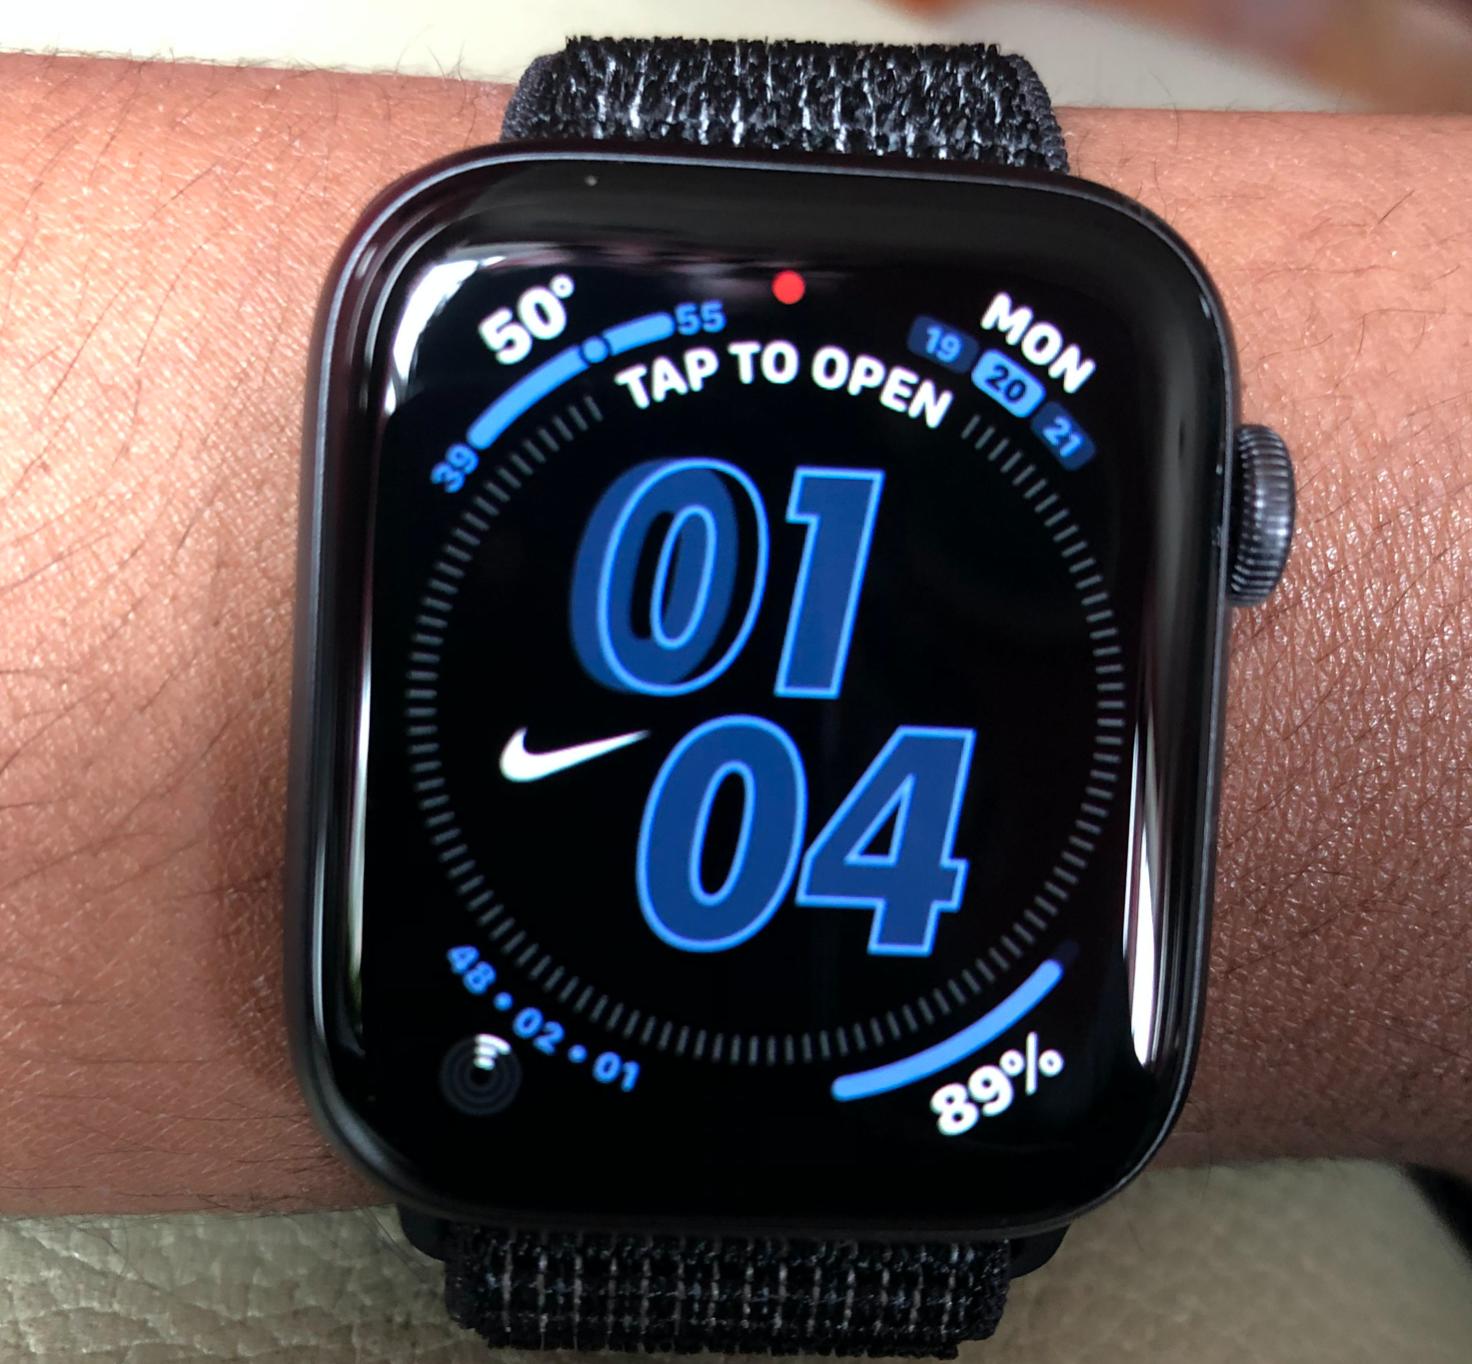 Apple Watch showing misaligned digit